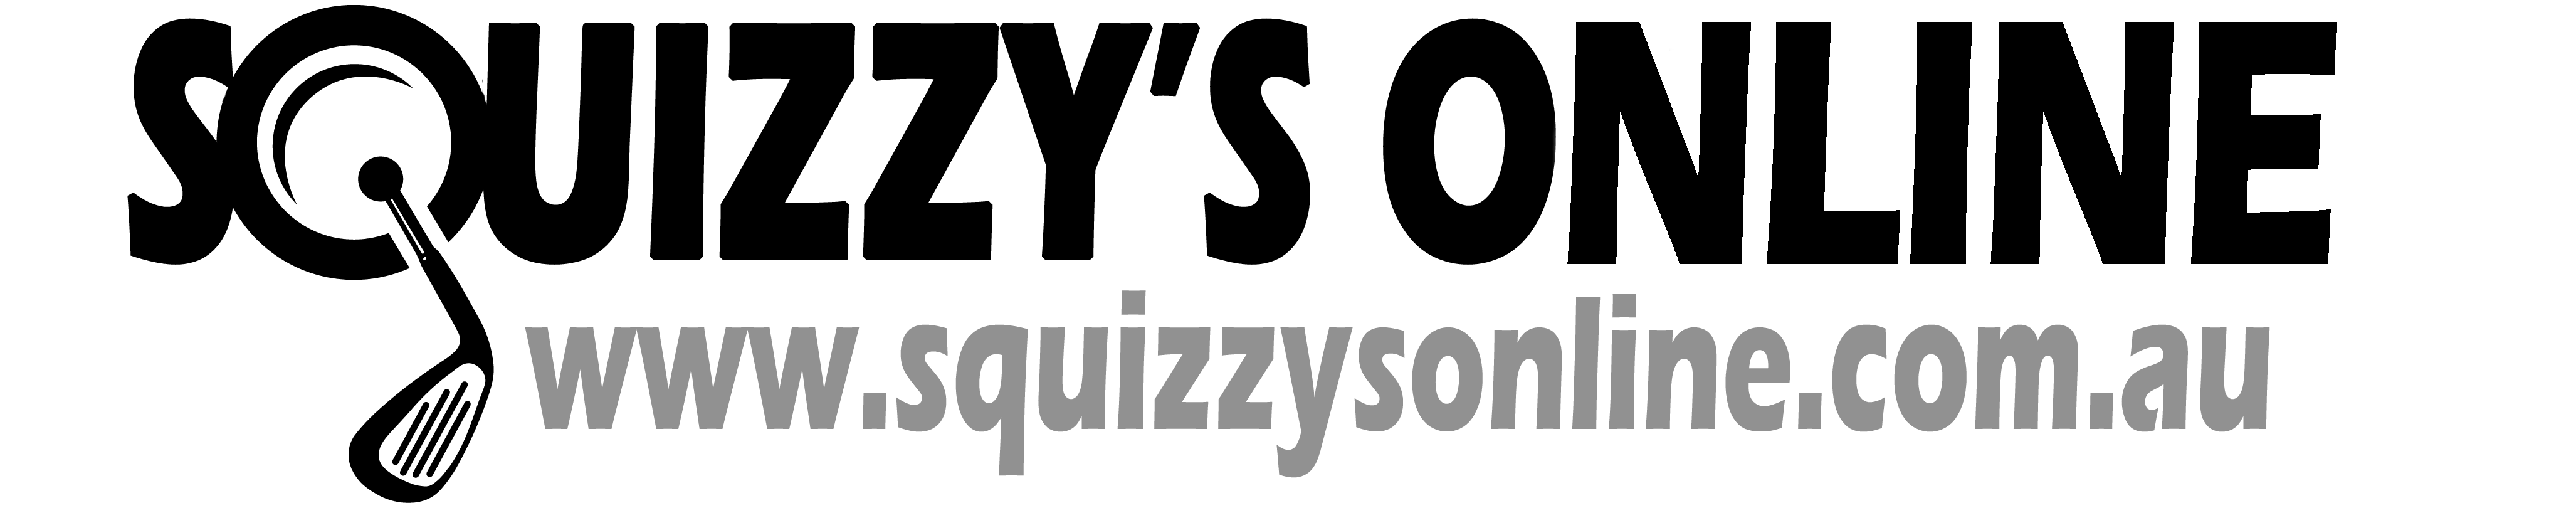 Squizzy's Online